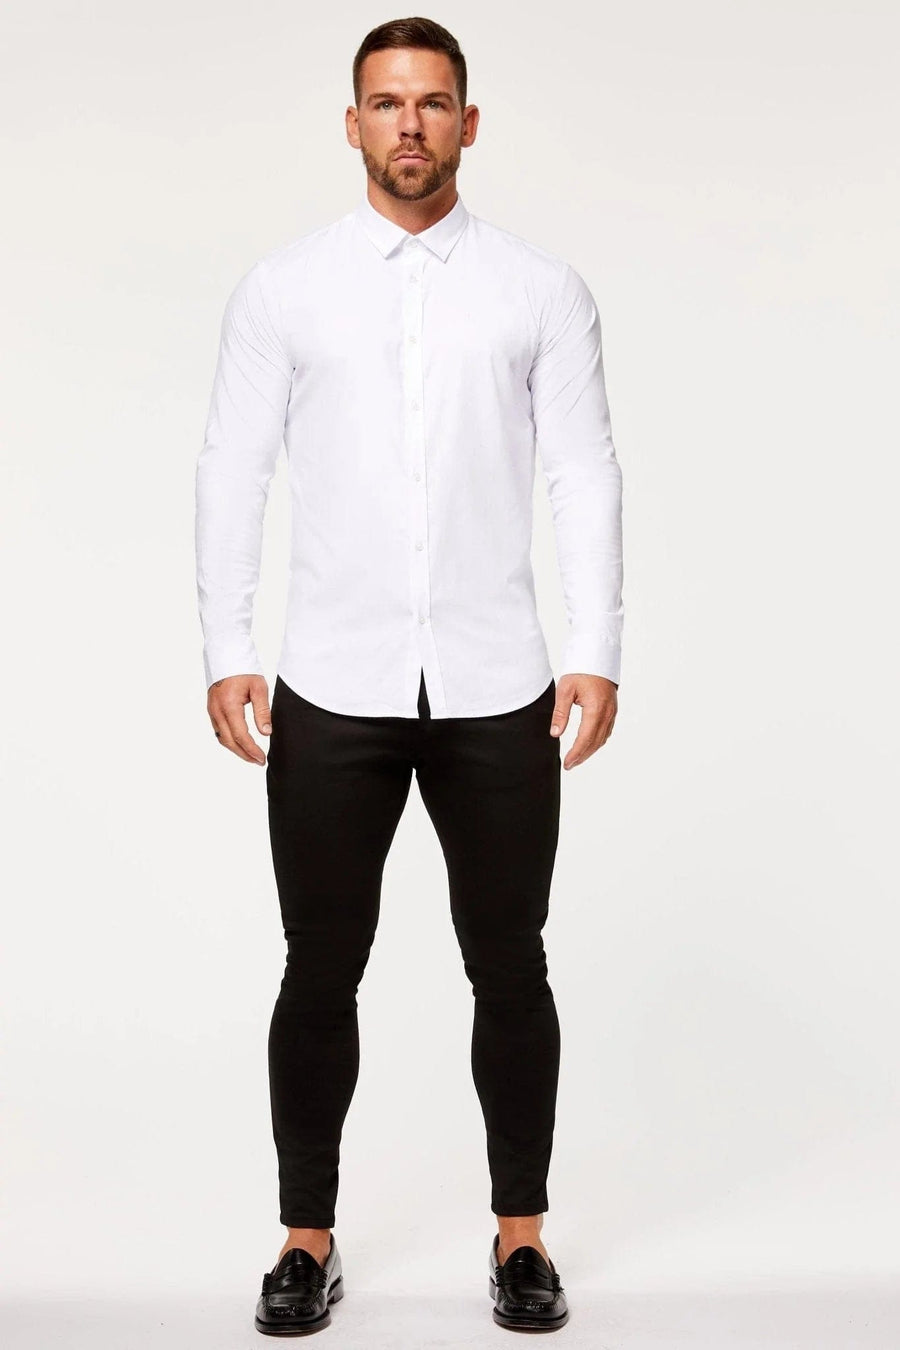 Legend London Shirts DRESS SHIRT - WHITE